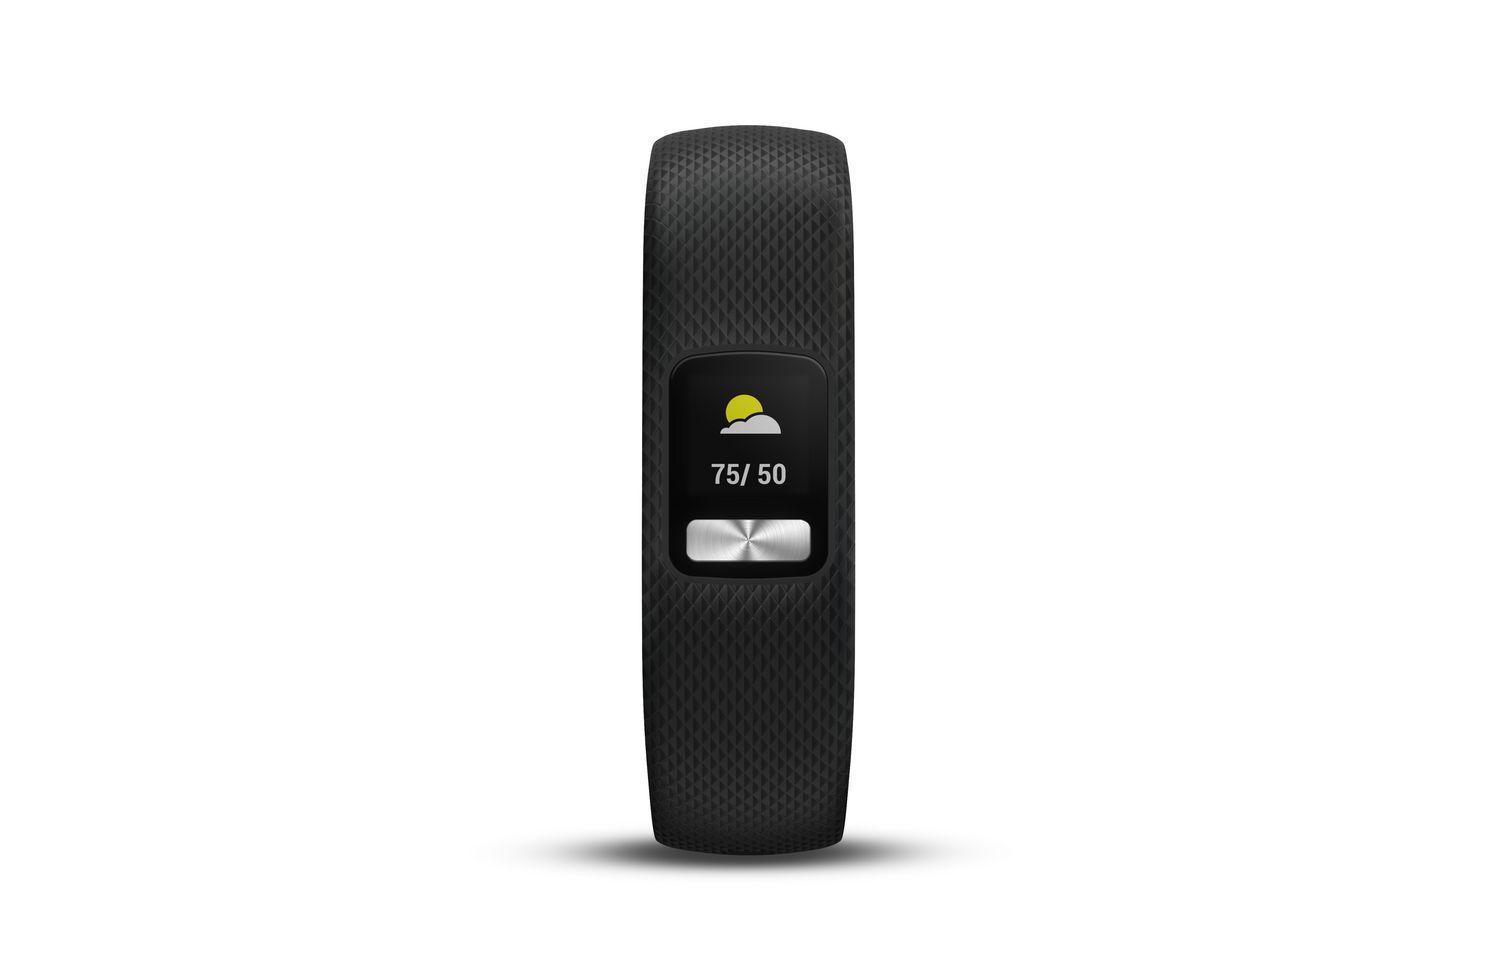 Garmin Vivofit 4 Fitness and Activity Tracker with 1 Year Battery